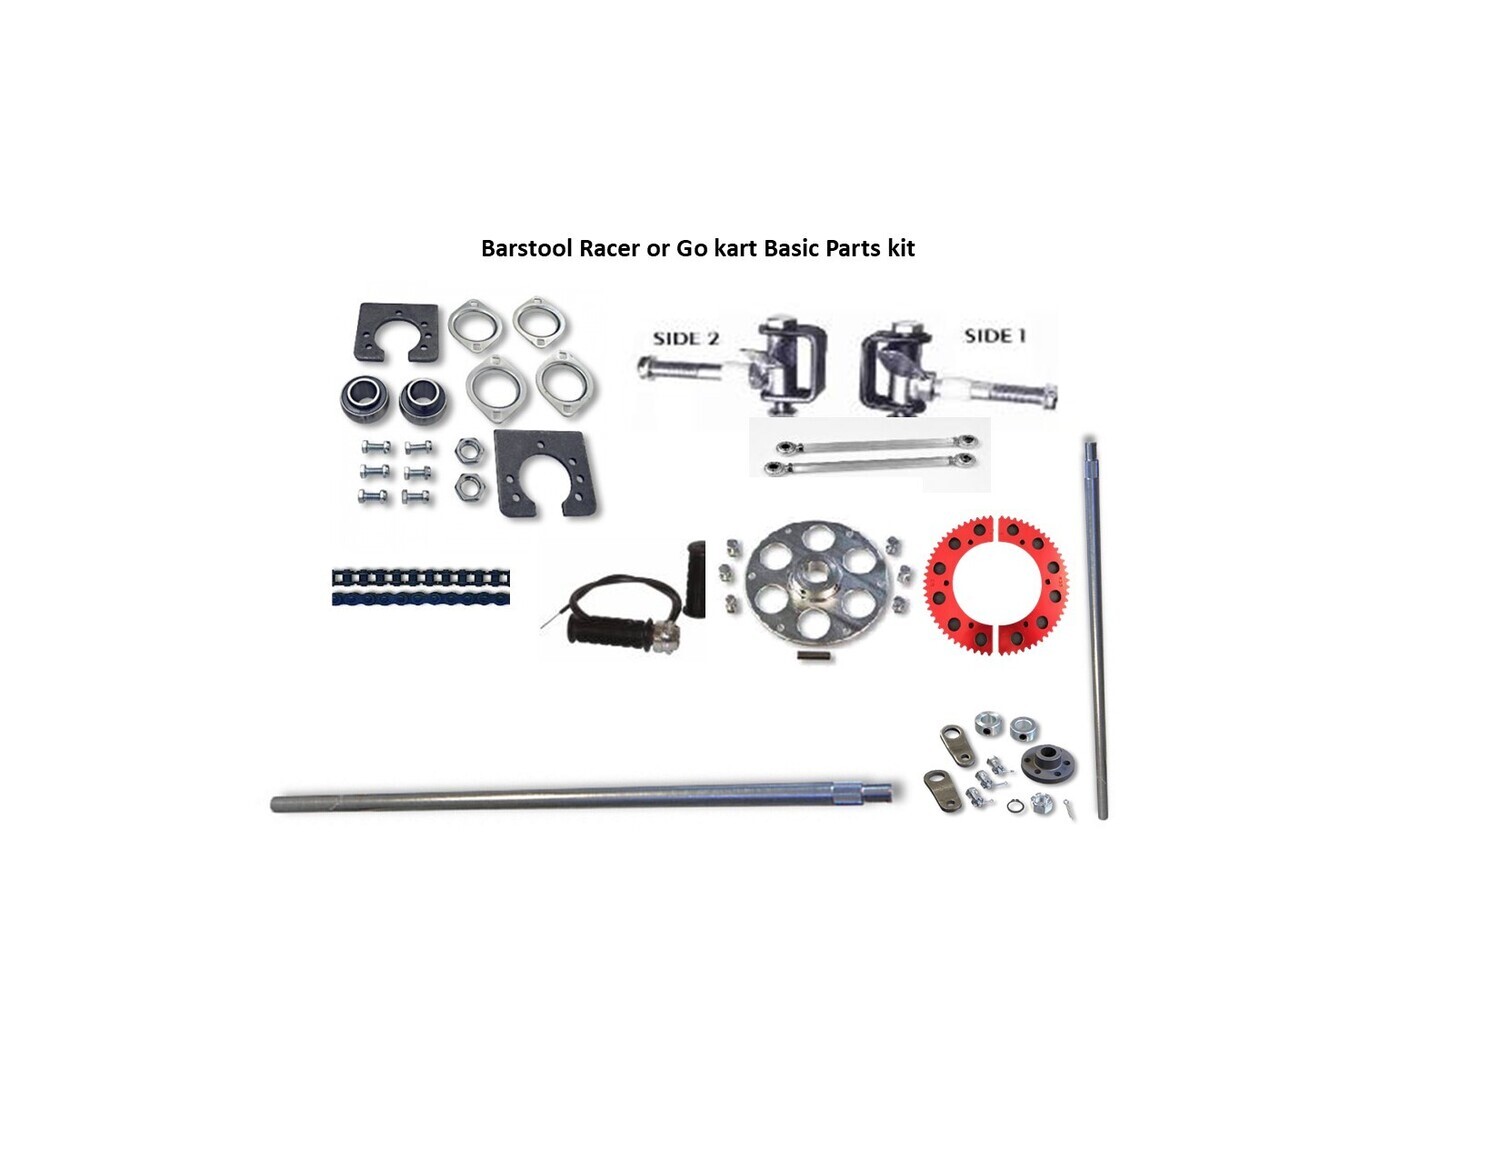 Barstool Racer Parts Kit 1-1/4"" axle